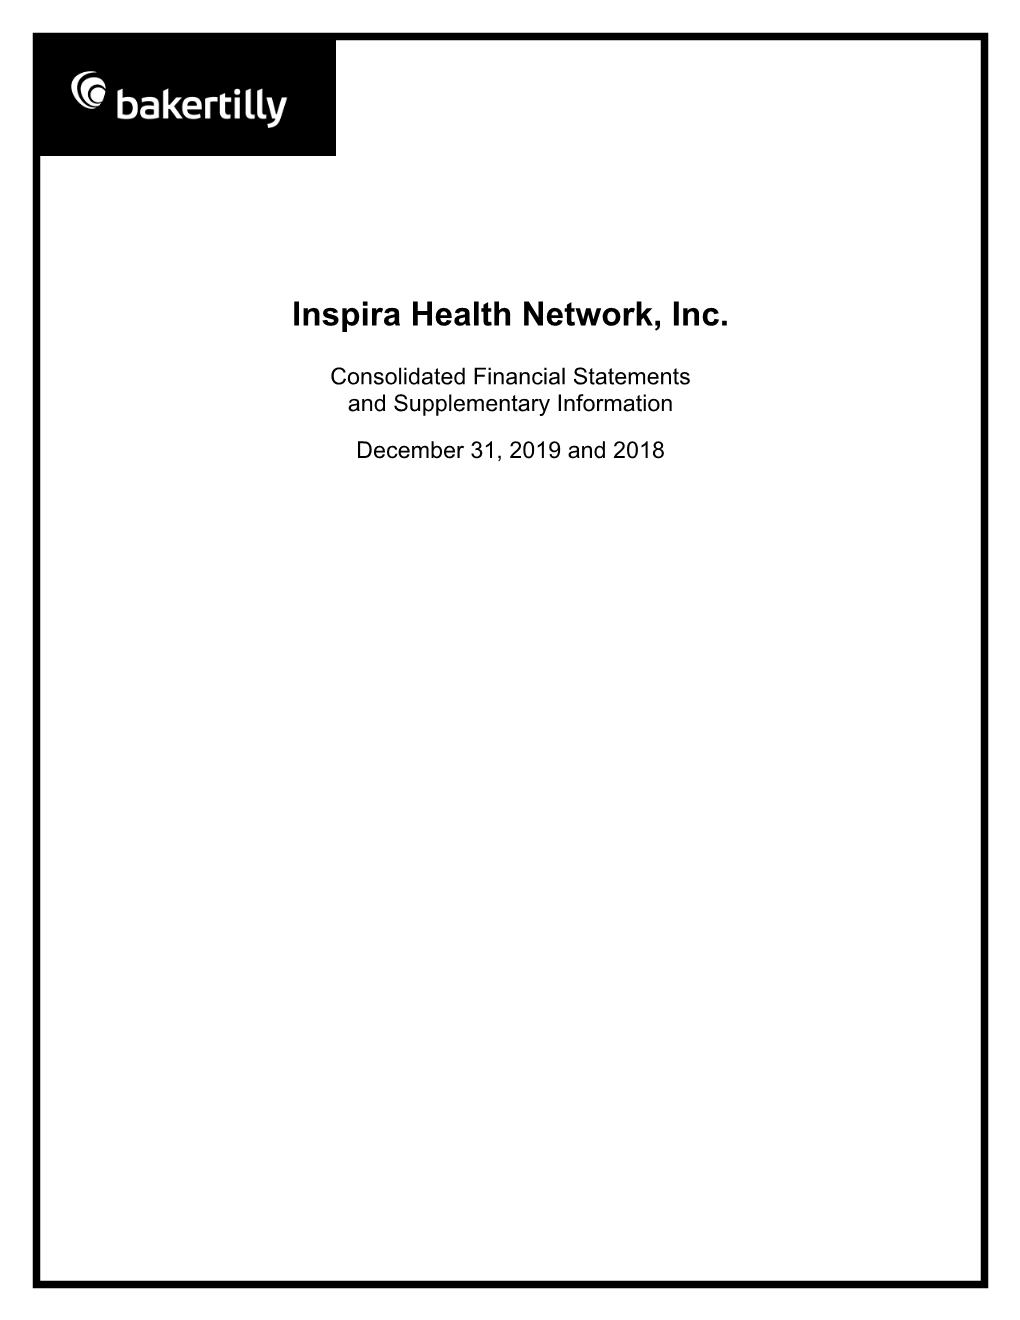 2019 Inspira Health Network Audited Financial Statements.Pdf